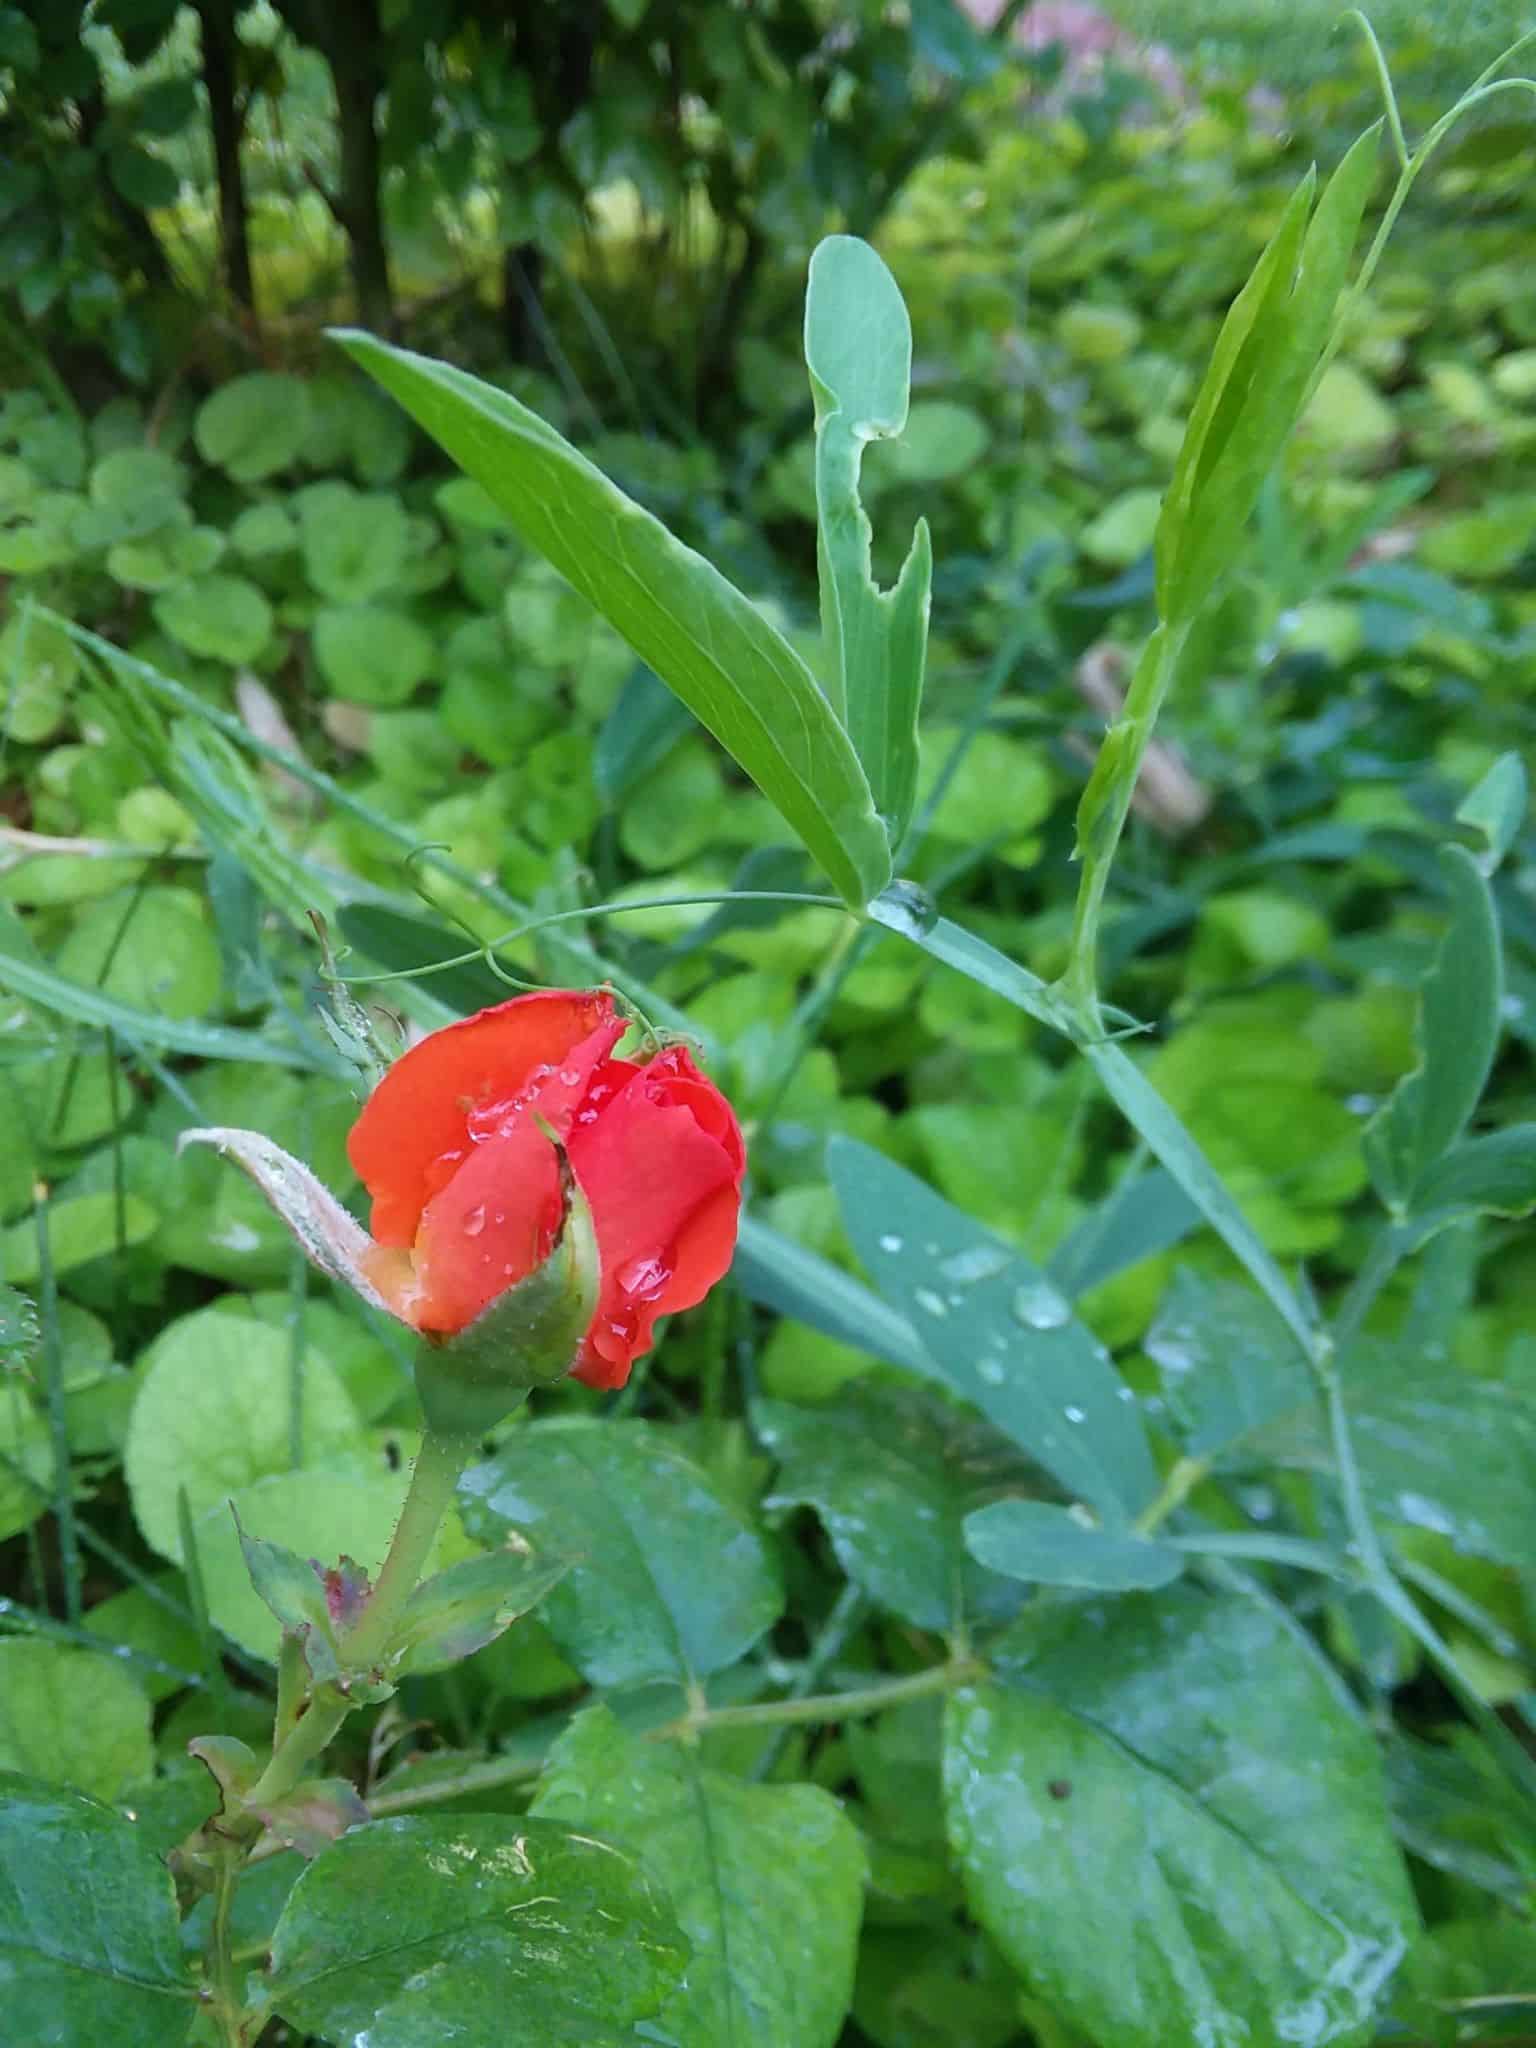 Rain dropped rose bud